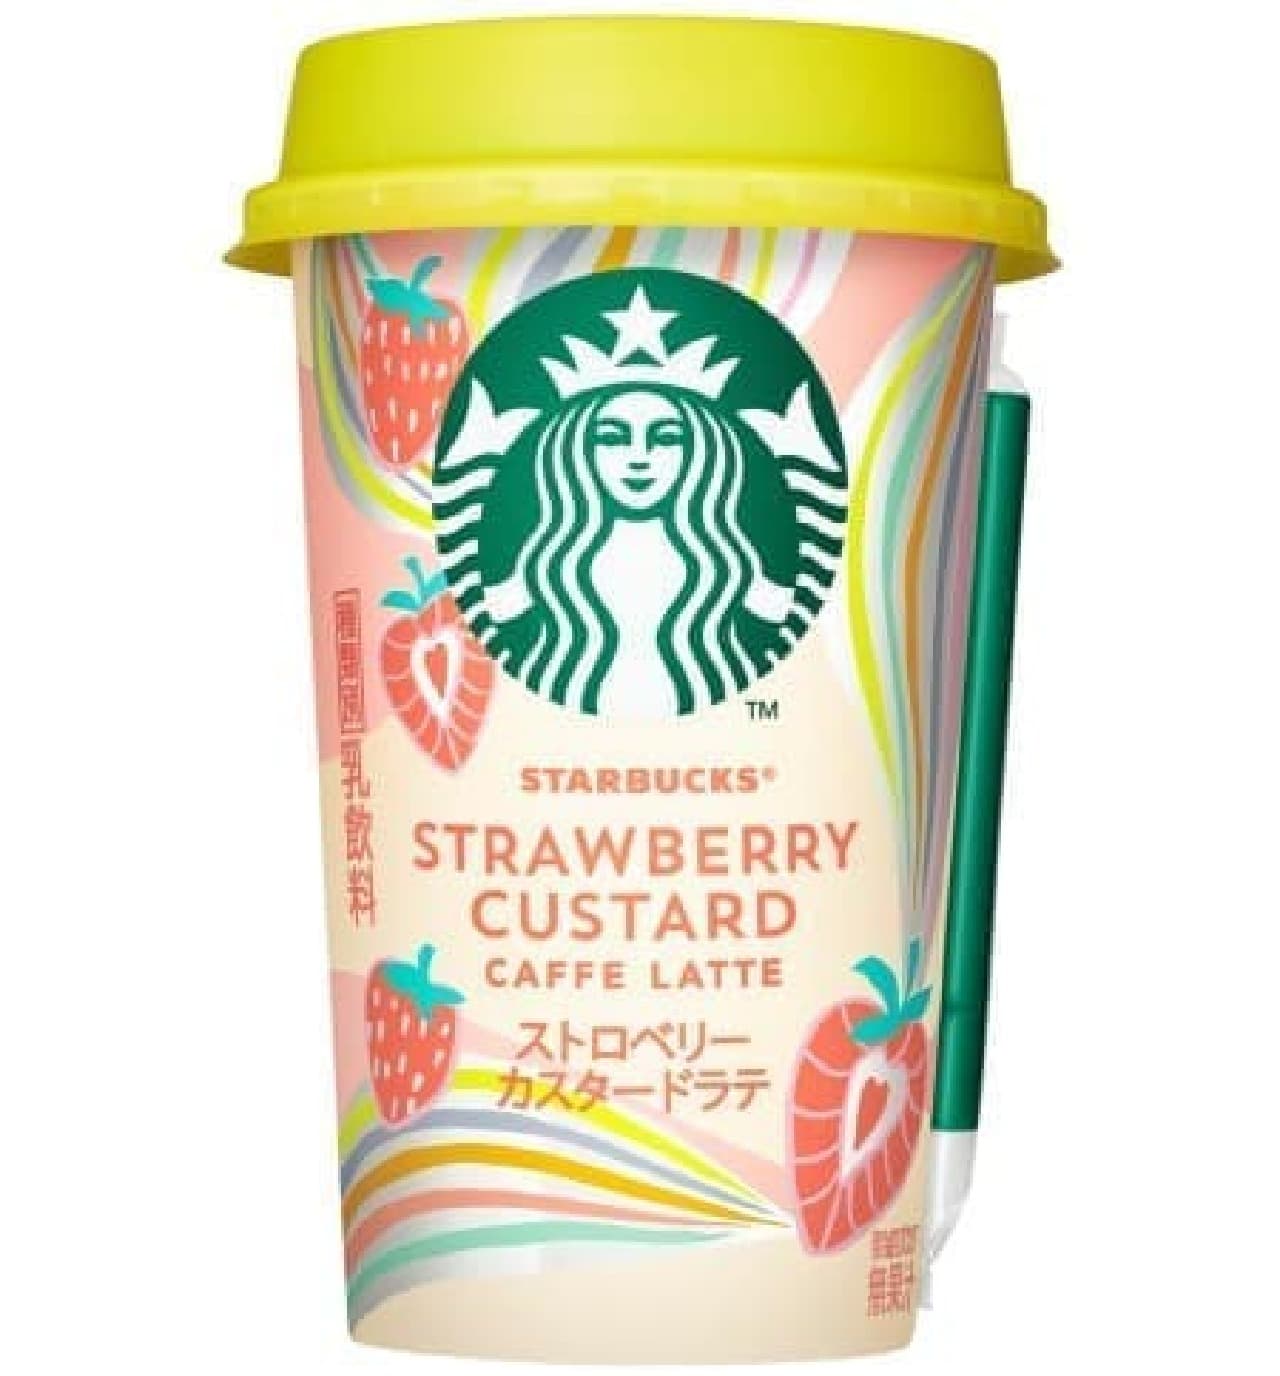 Starbucks "Strawberry Custard Latte"